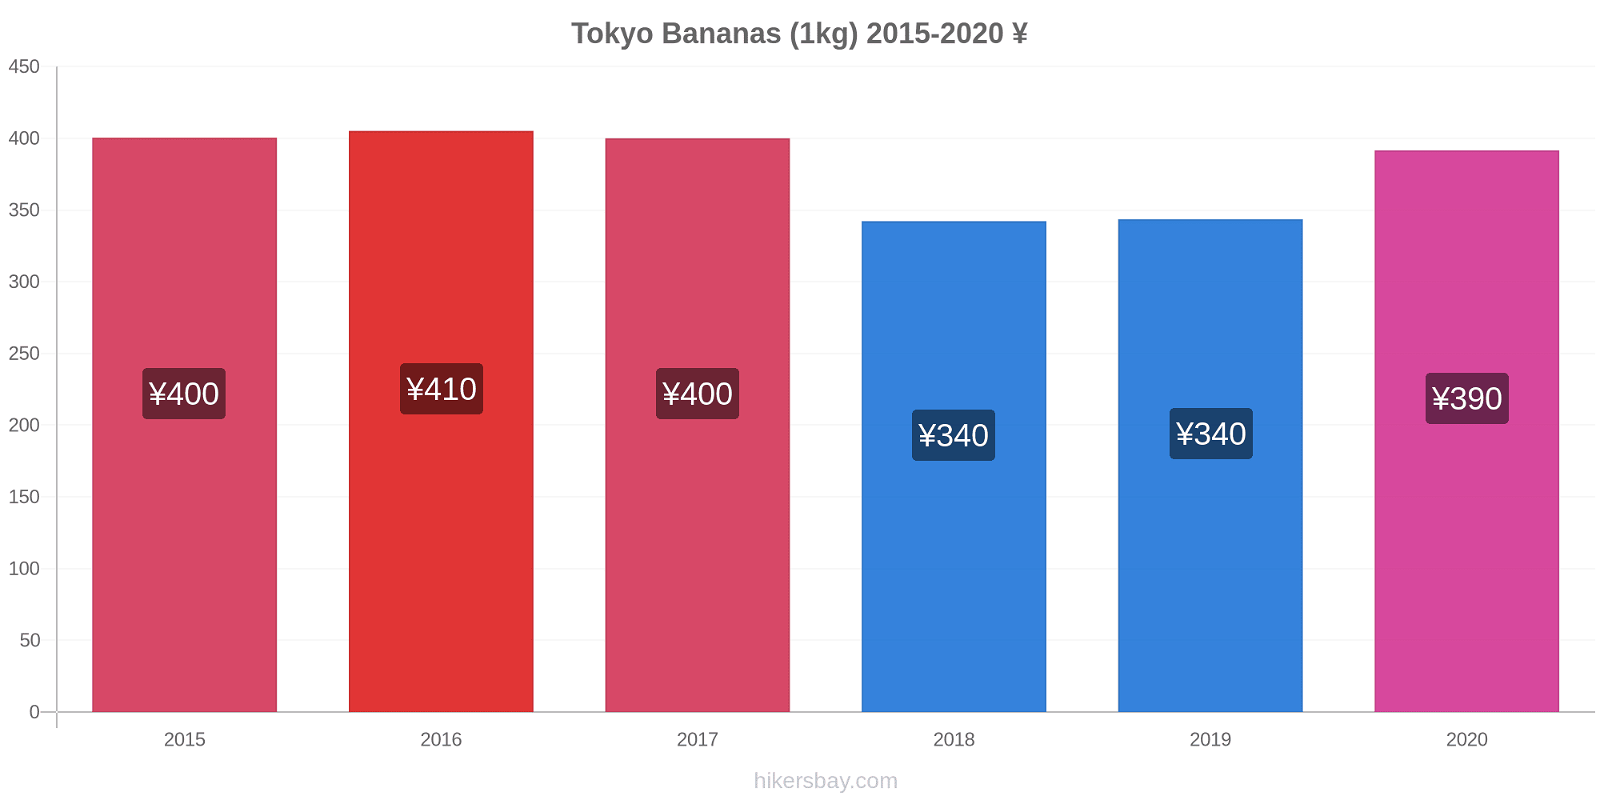 Tokyo price changes Bananas (1kg) hikersbay.com